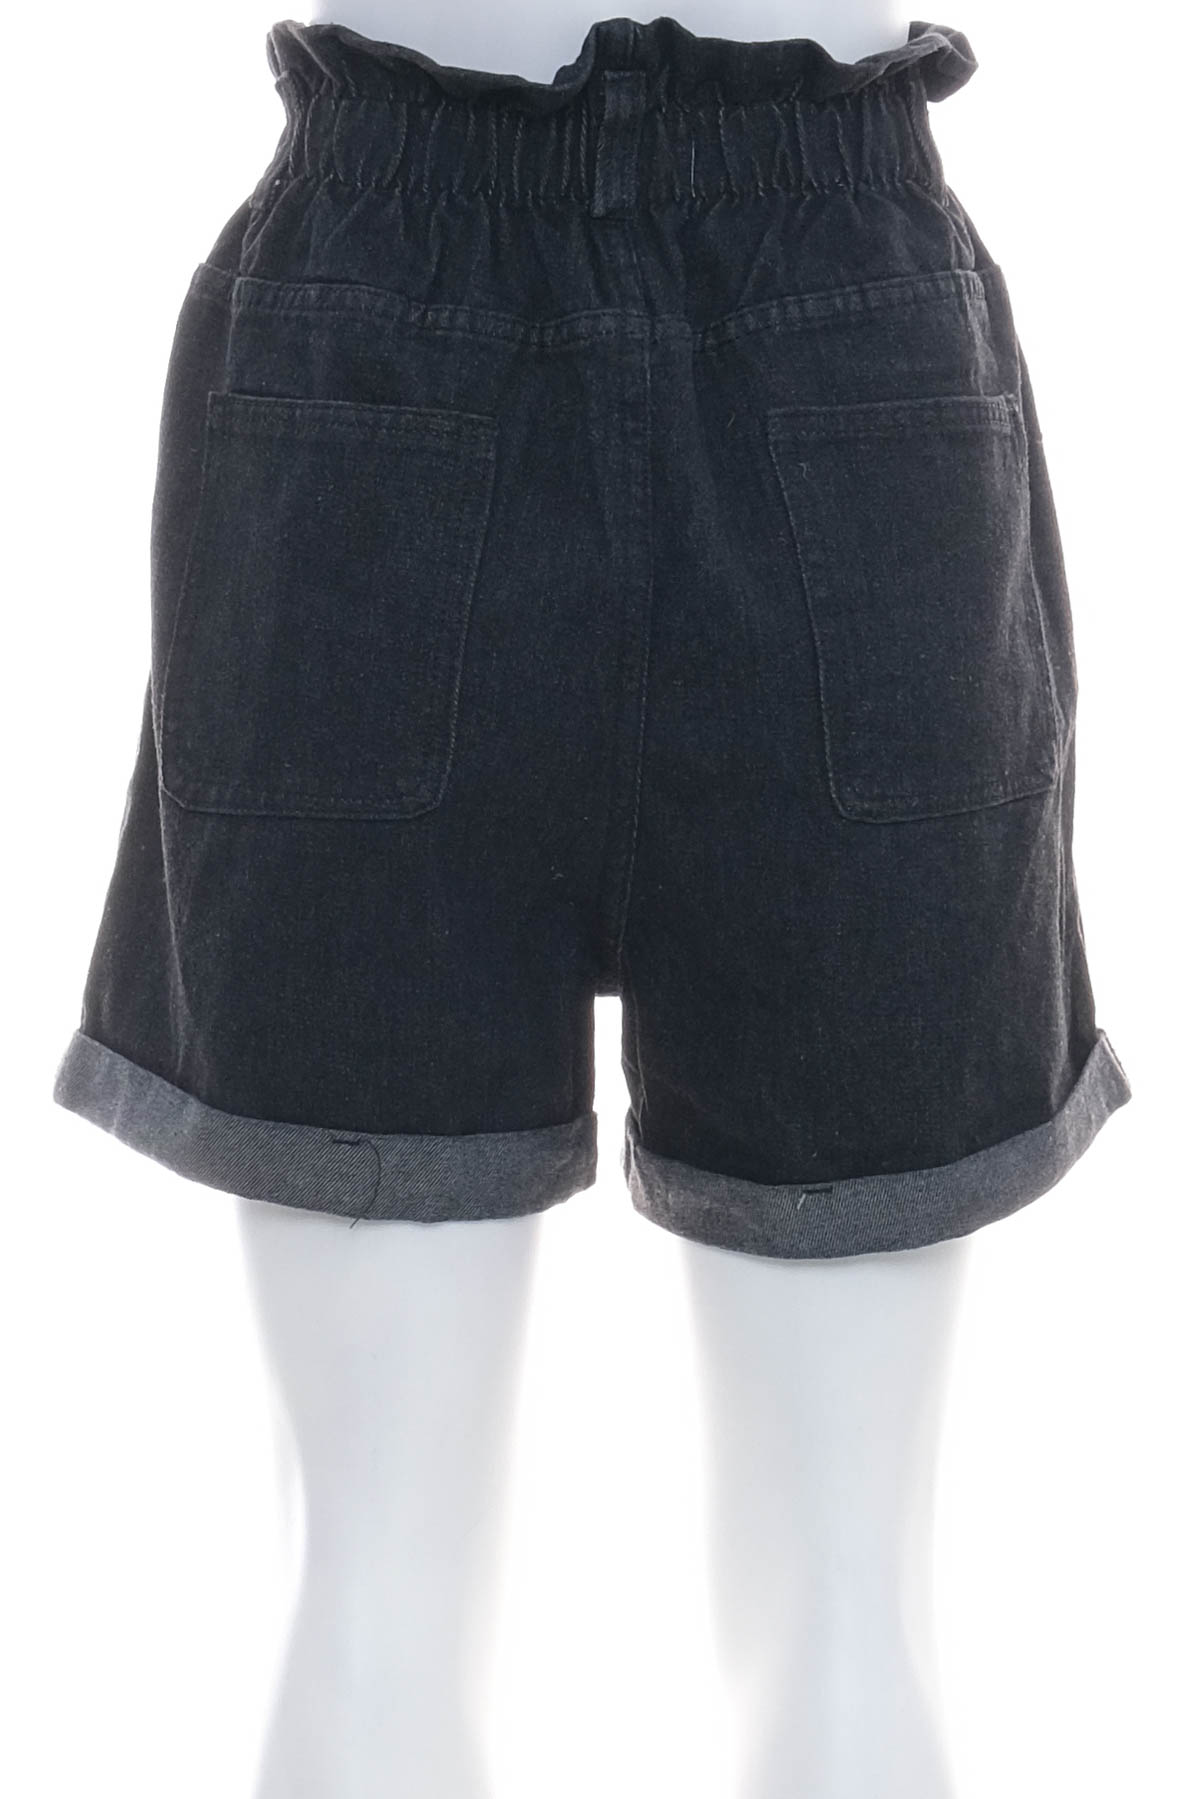 Female shorts - MINX & MOSS - 1